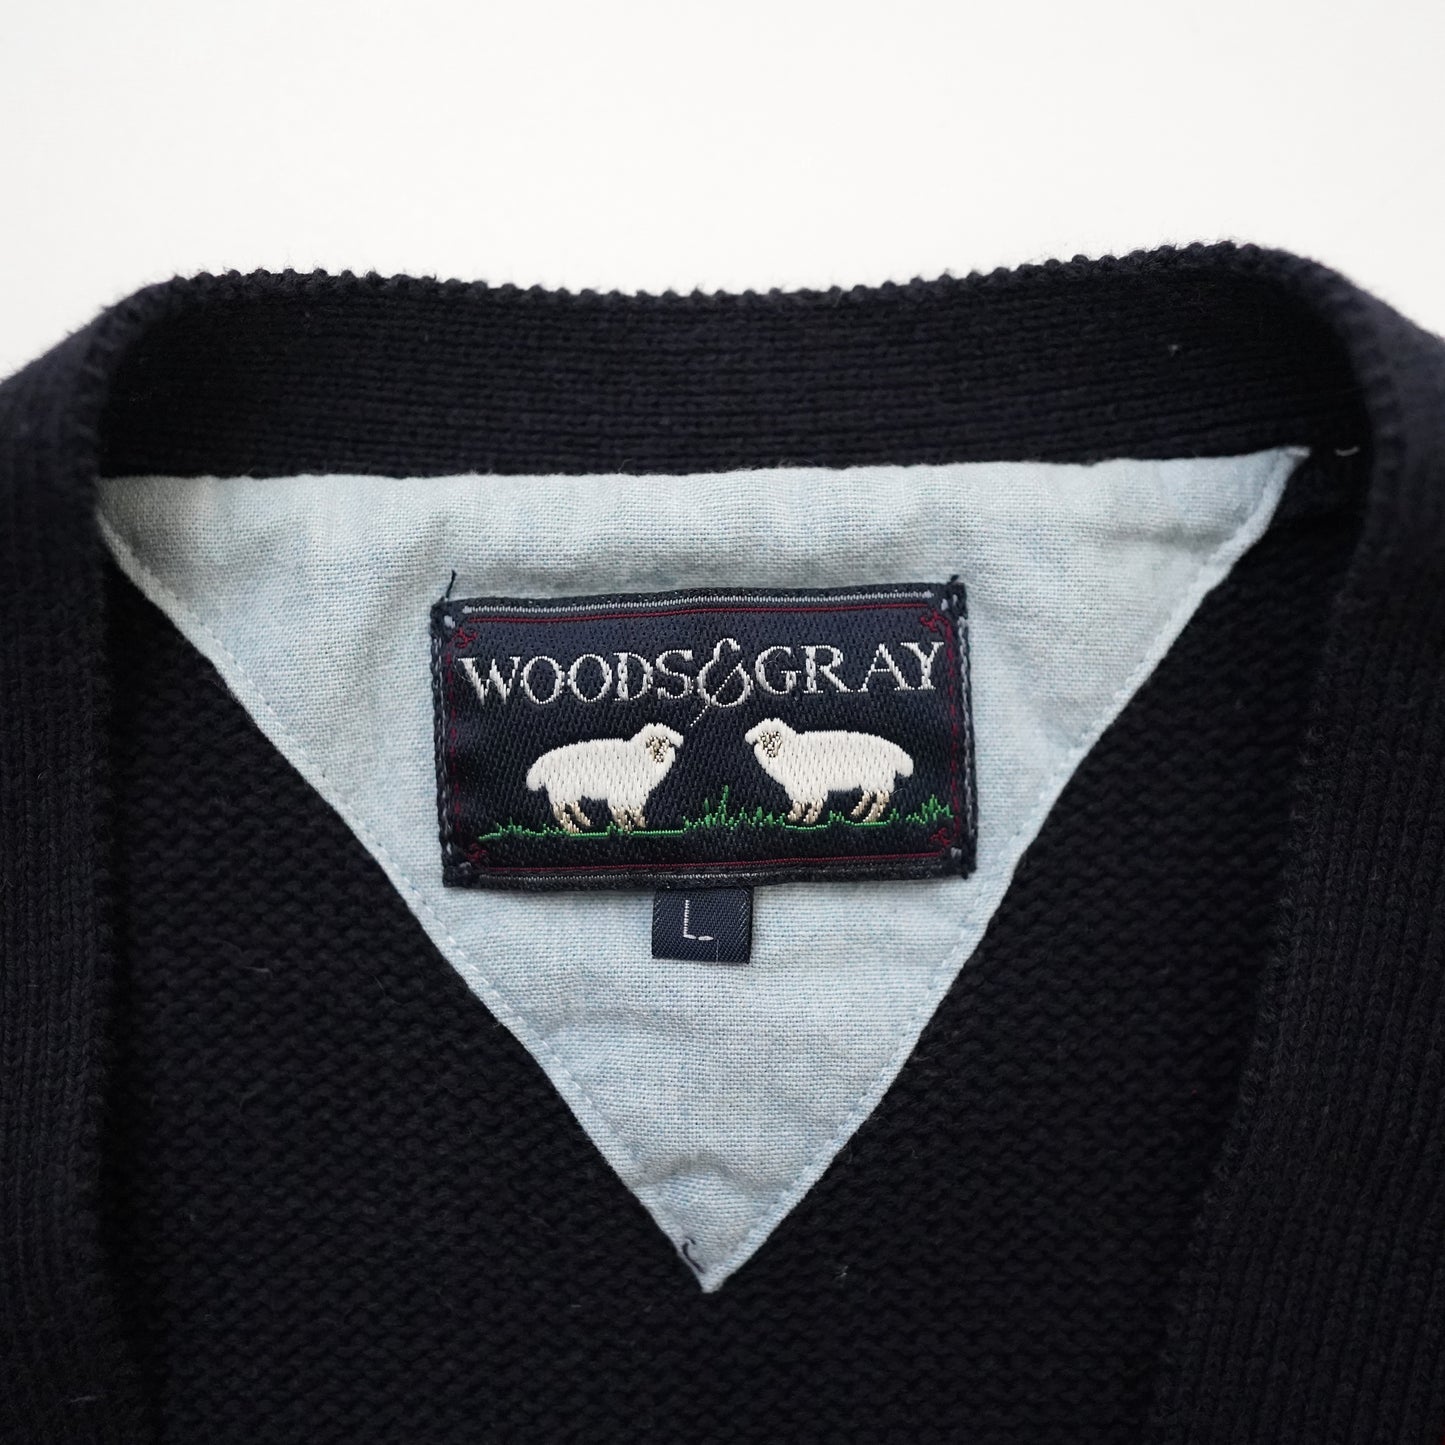 WOODS&GRAY cardigan